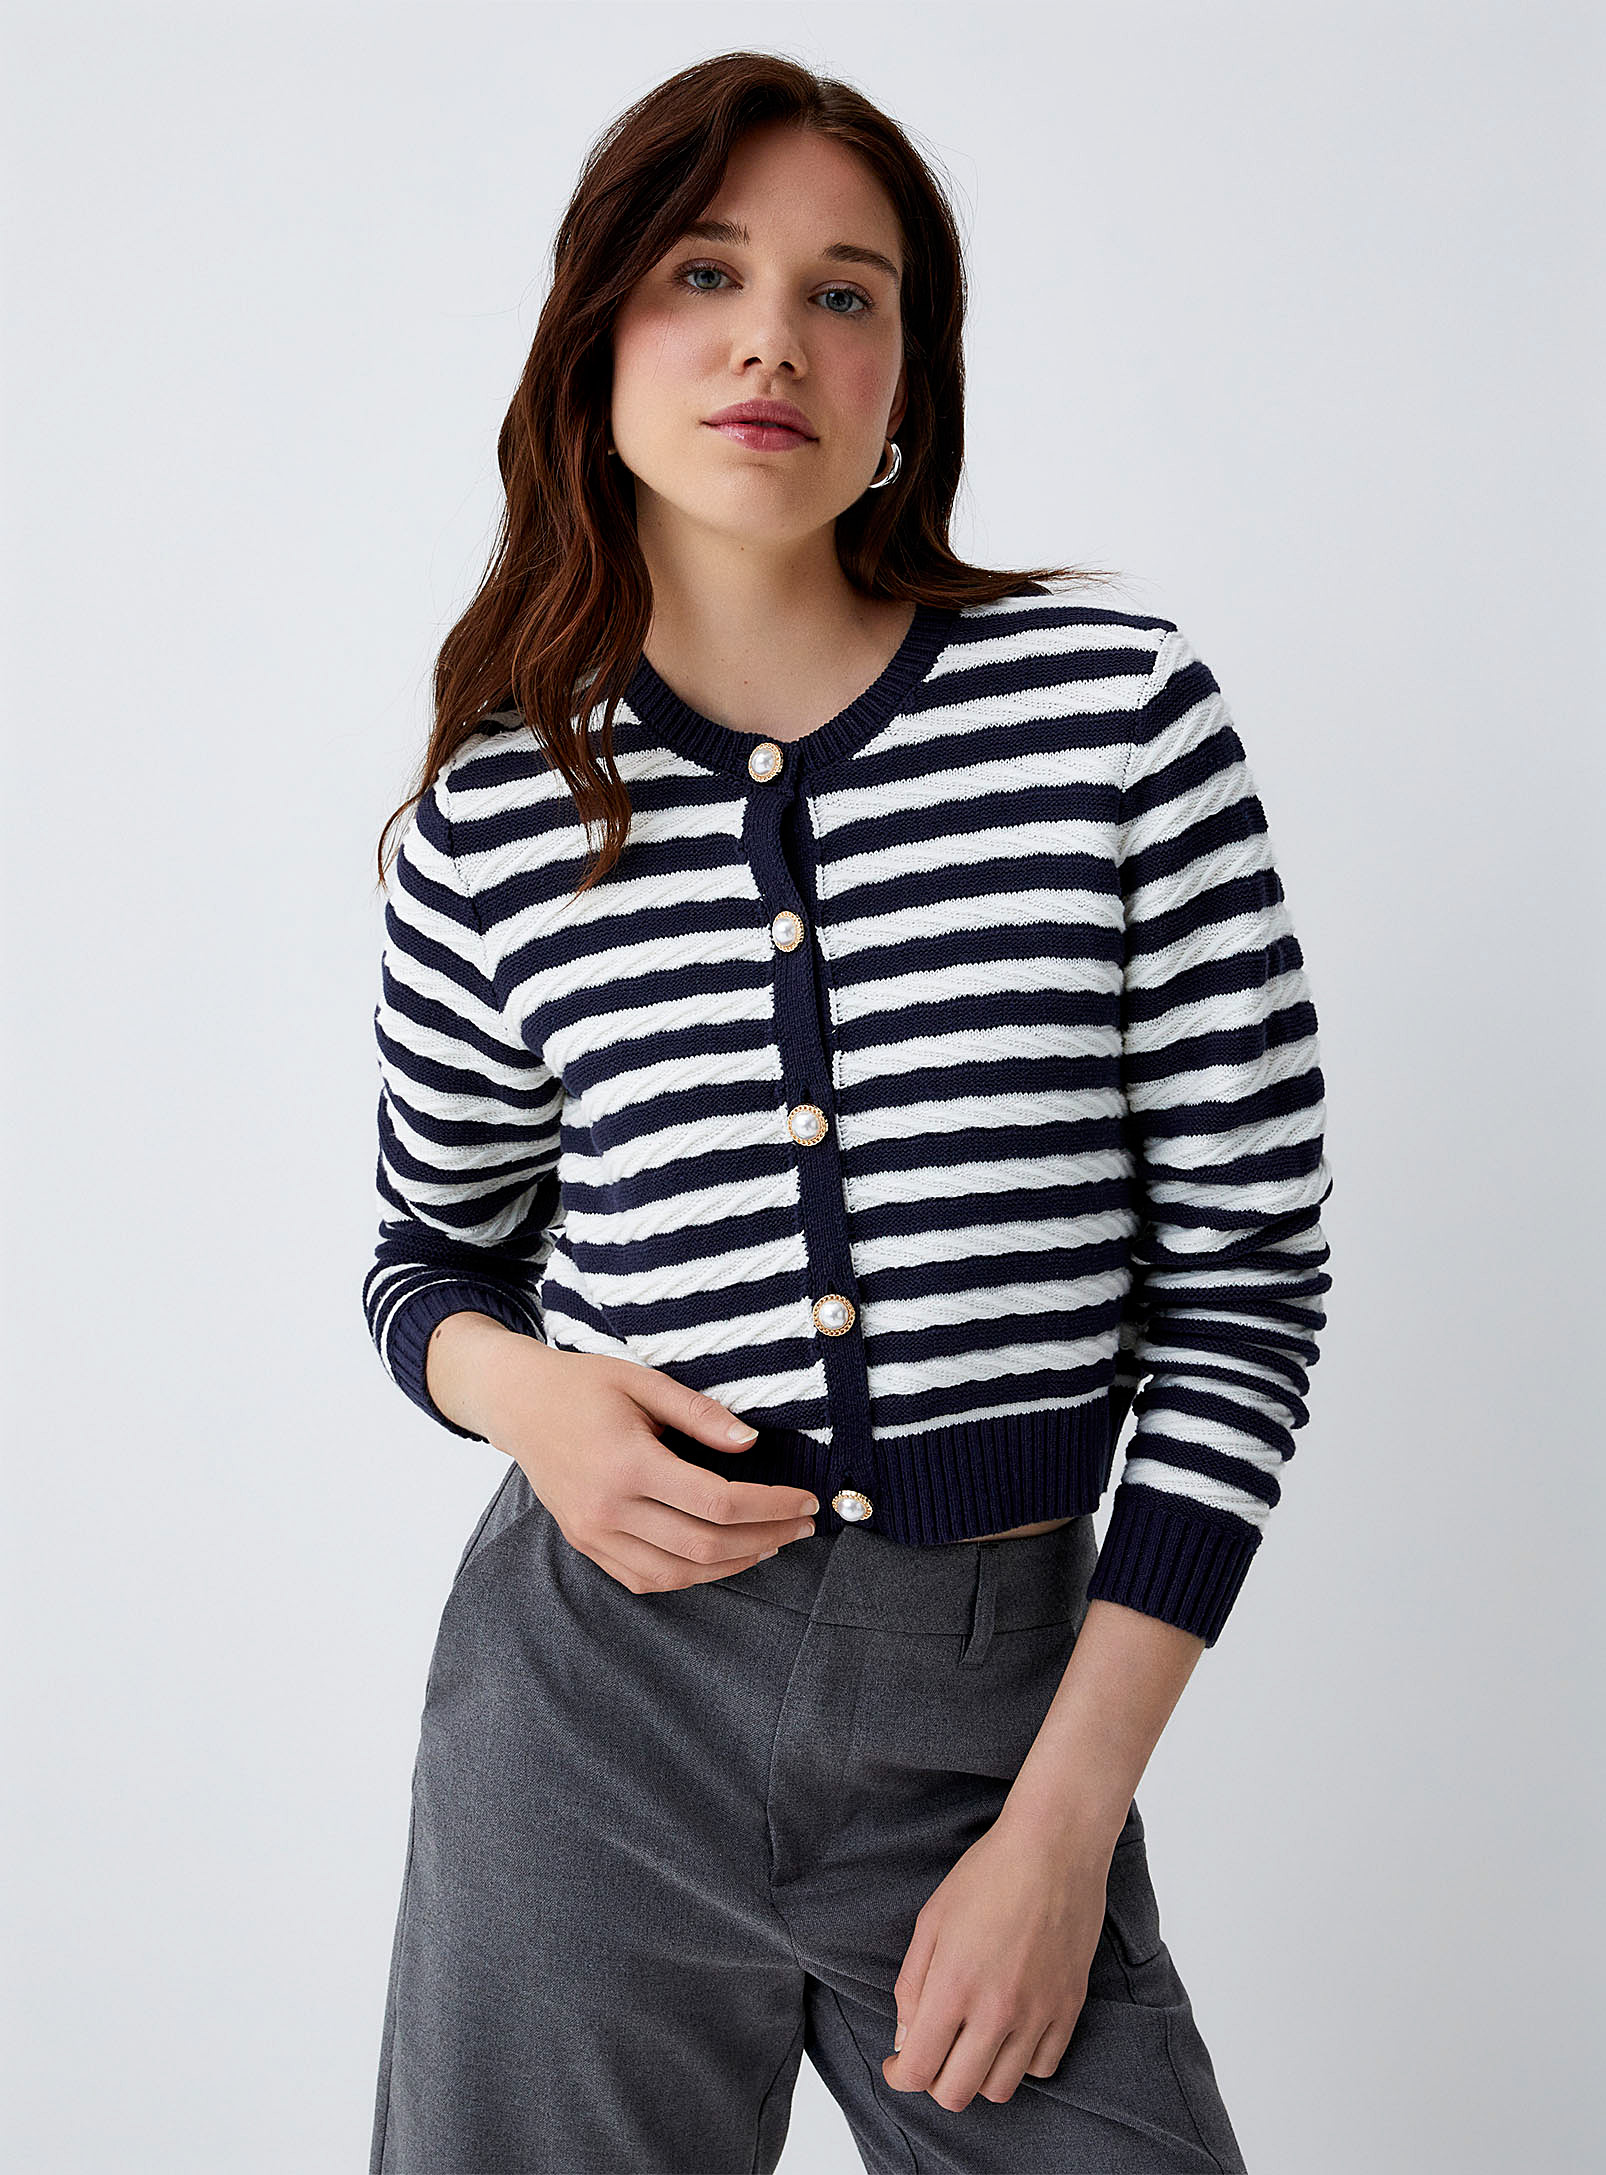 Twik - Women's Jewel-buttons striped Cardigan Sweater